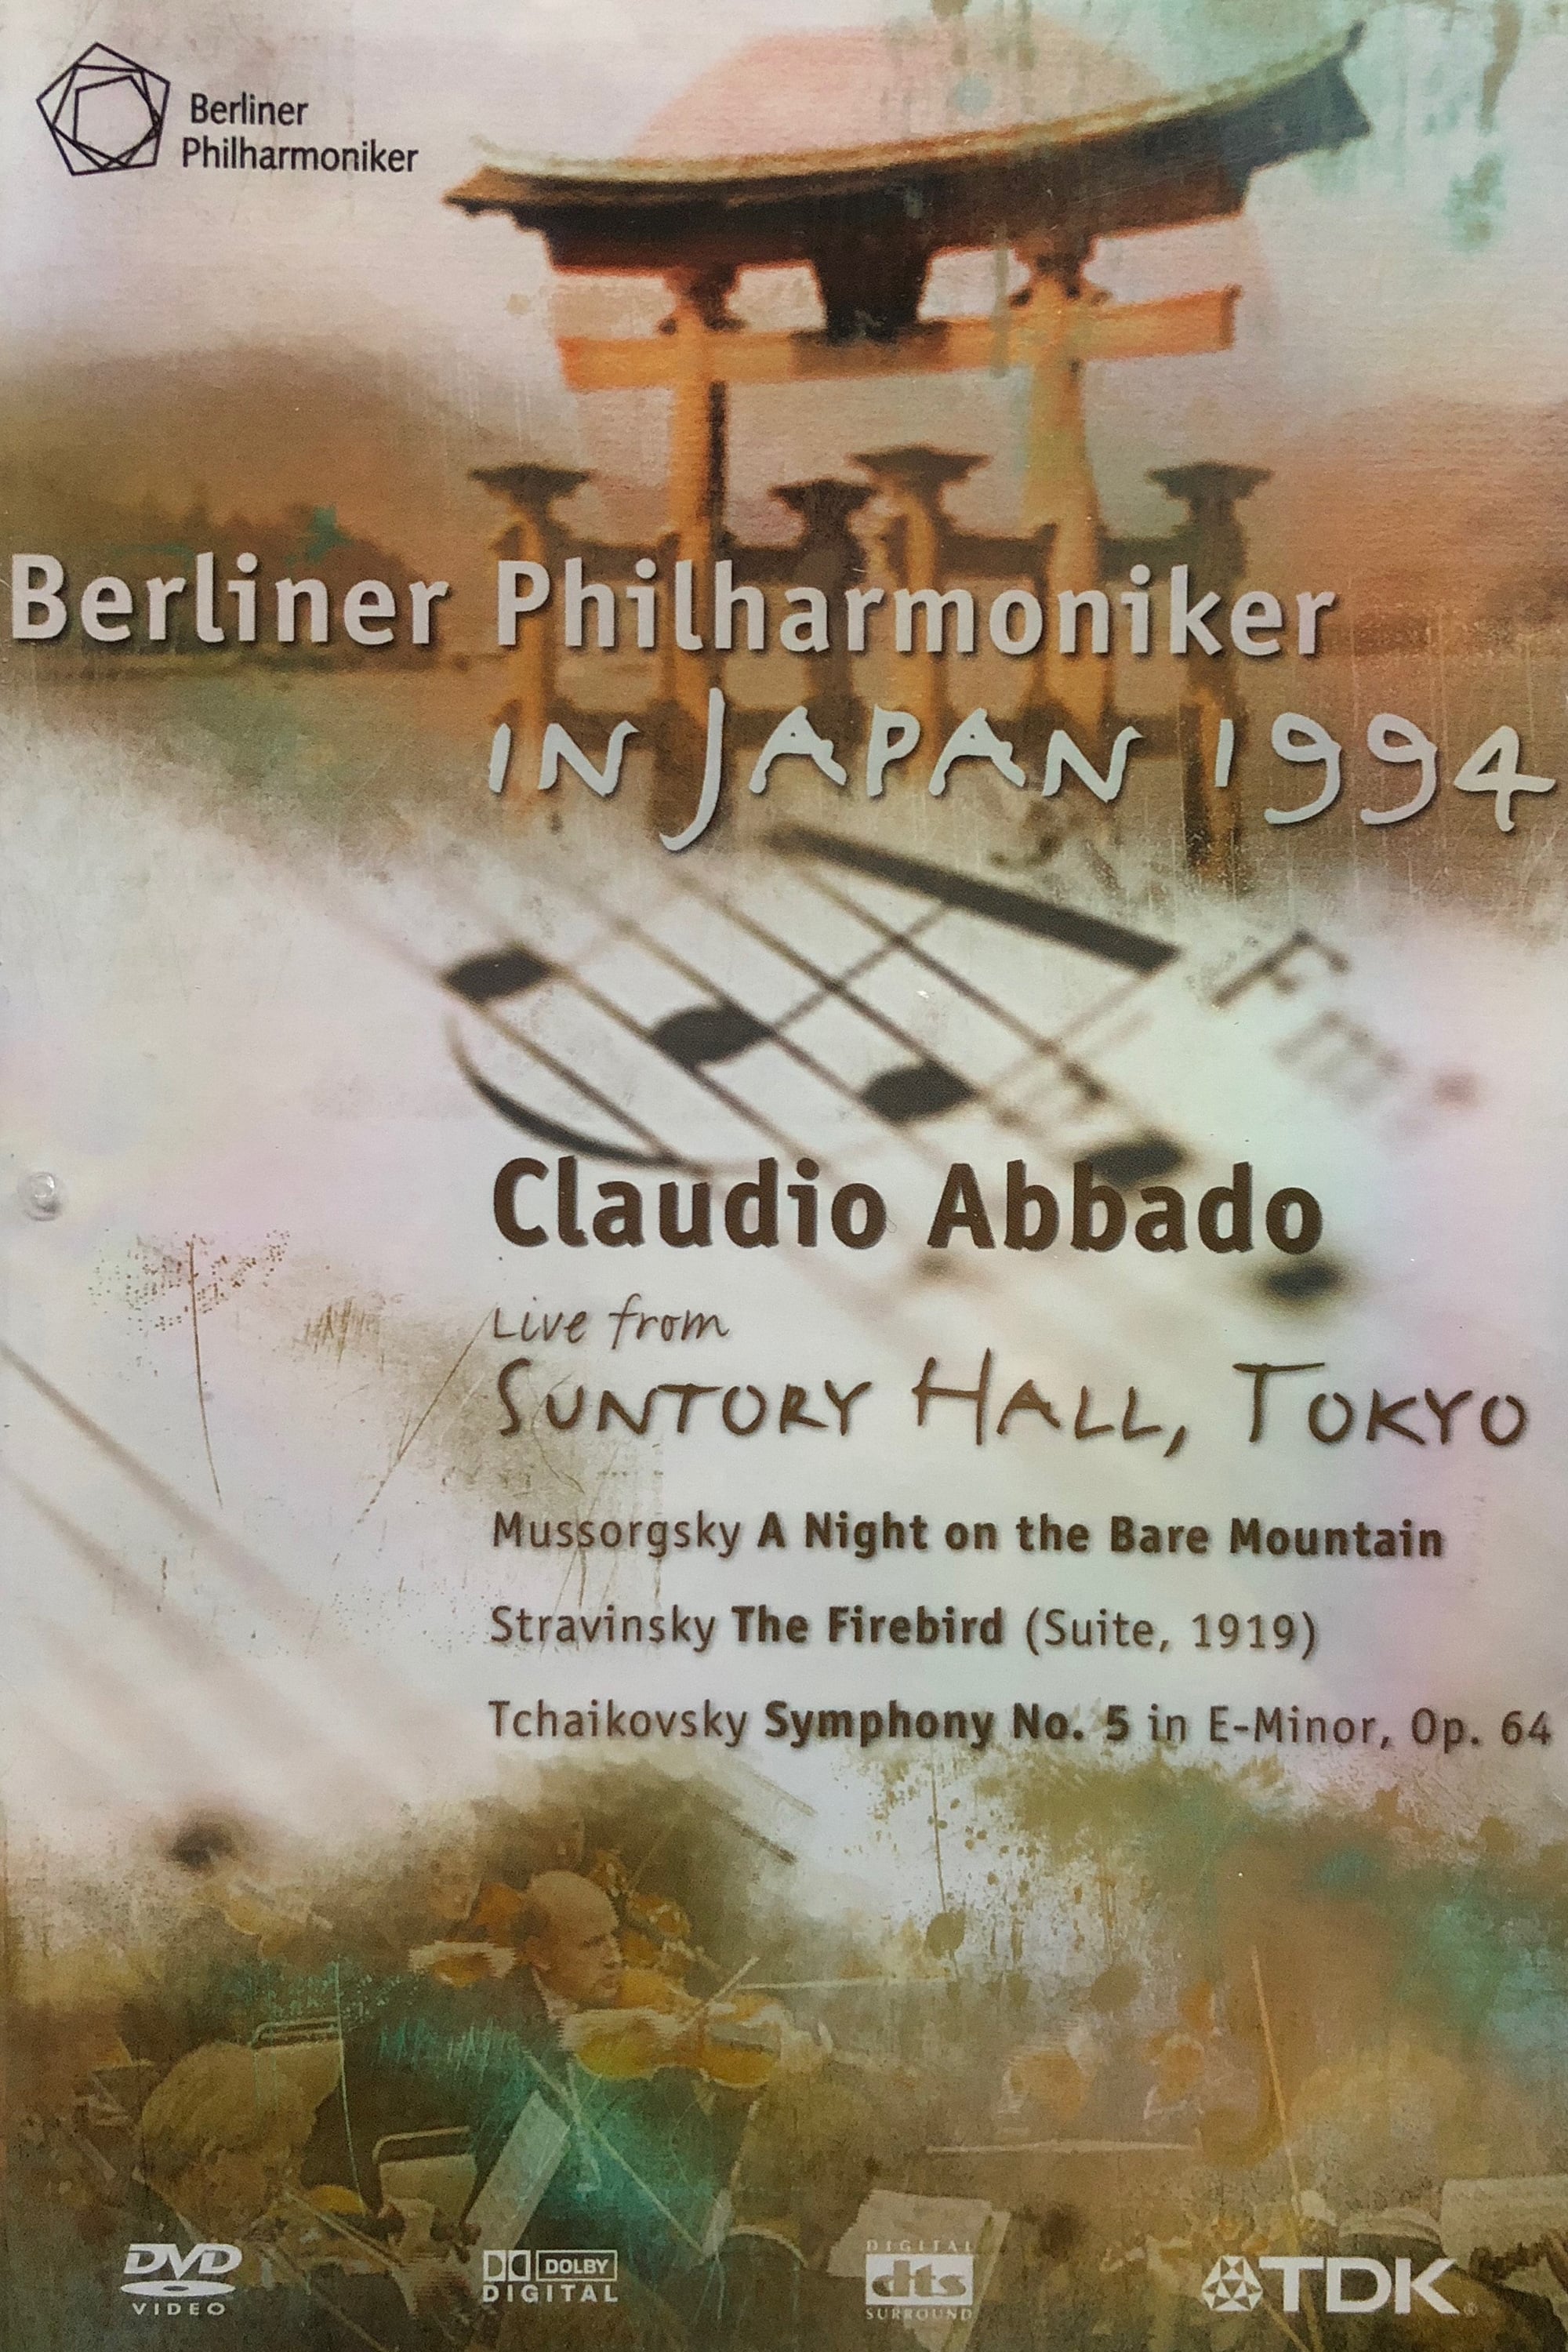 Berlin Philharmonic in Japan 1994